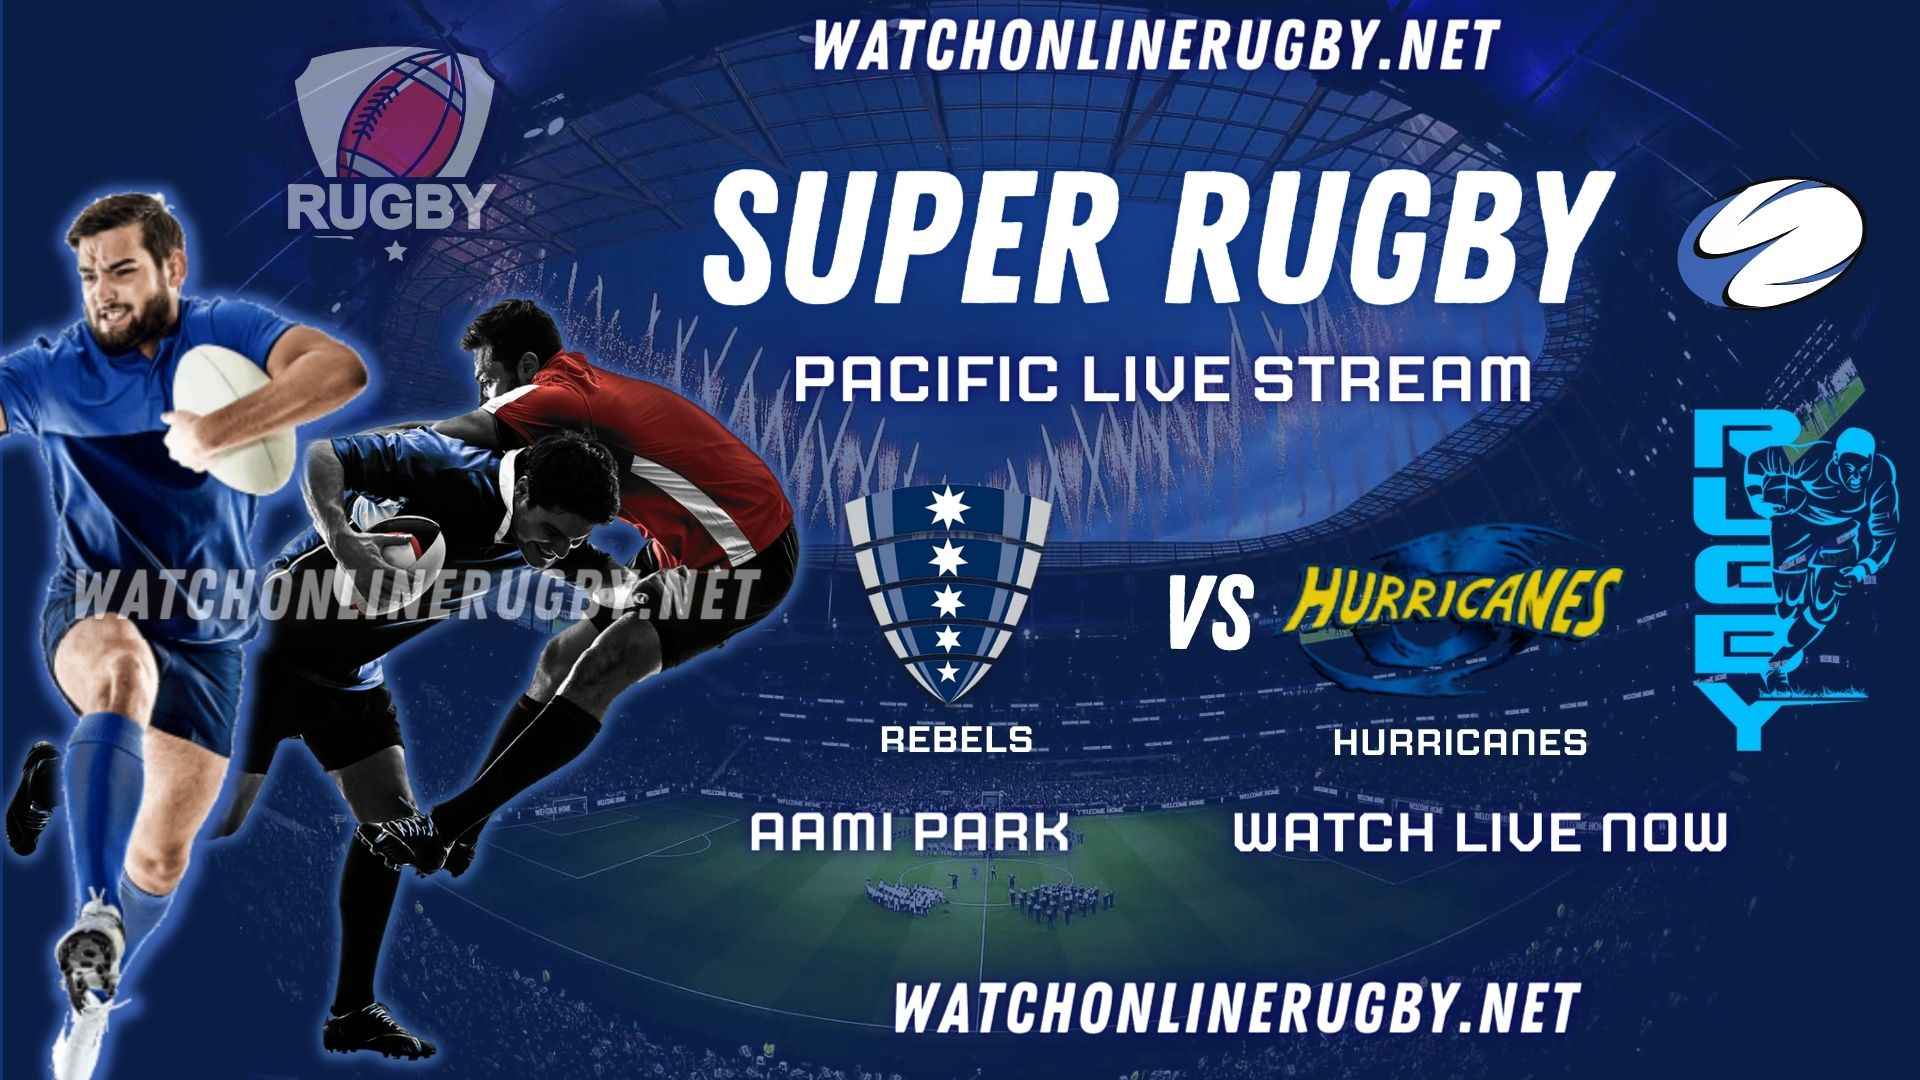 rebels-vs-hurricanes-live-stream-rugby